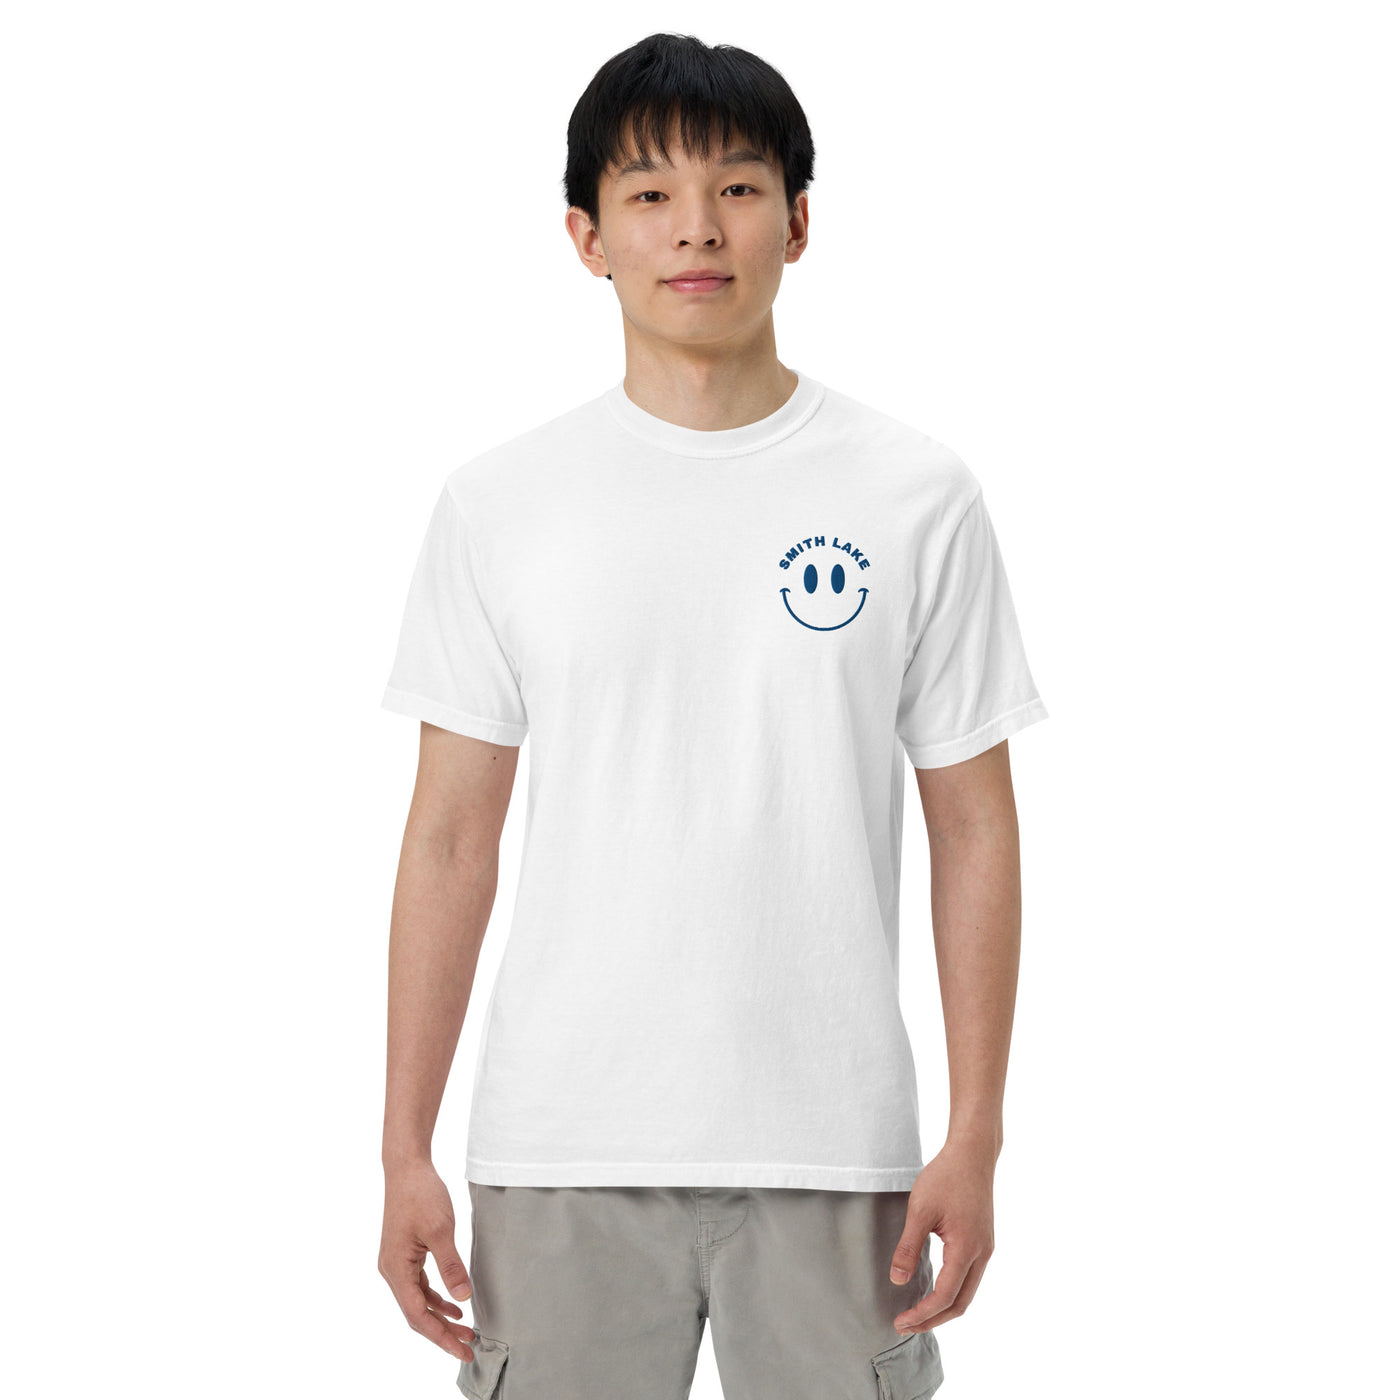 Smith Lake Embroidered T-Shirt T-Shirts Ezra's Clothing White S 